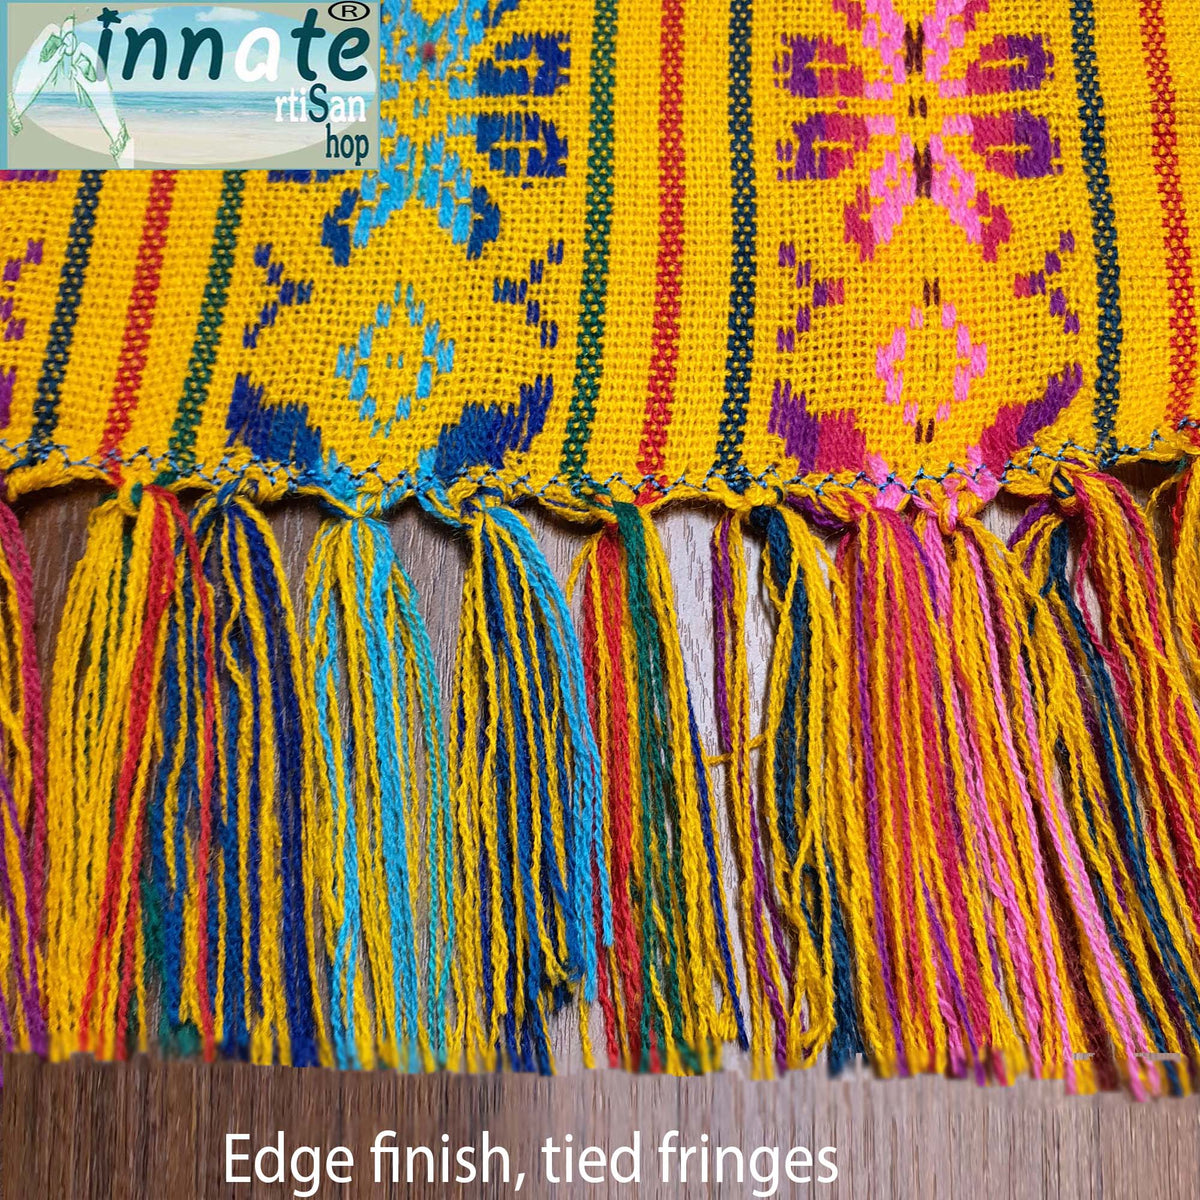 fringed table runner, Mexican table runner, marigold, tassels, custom made, loom, artisan